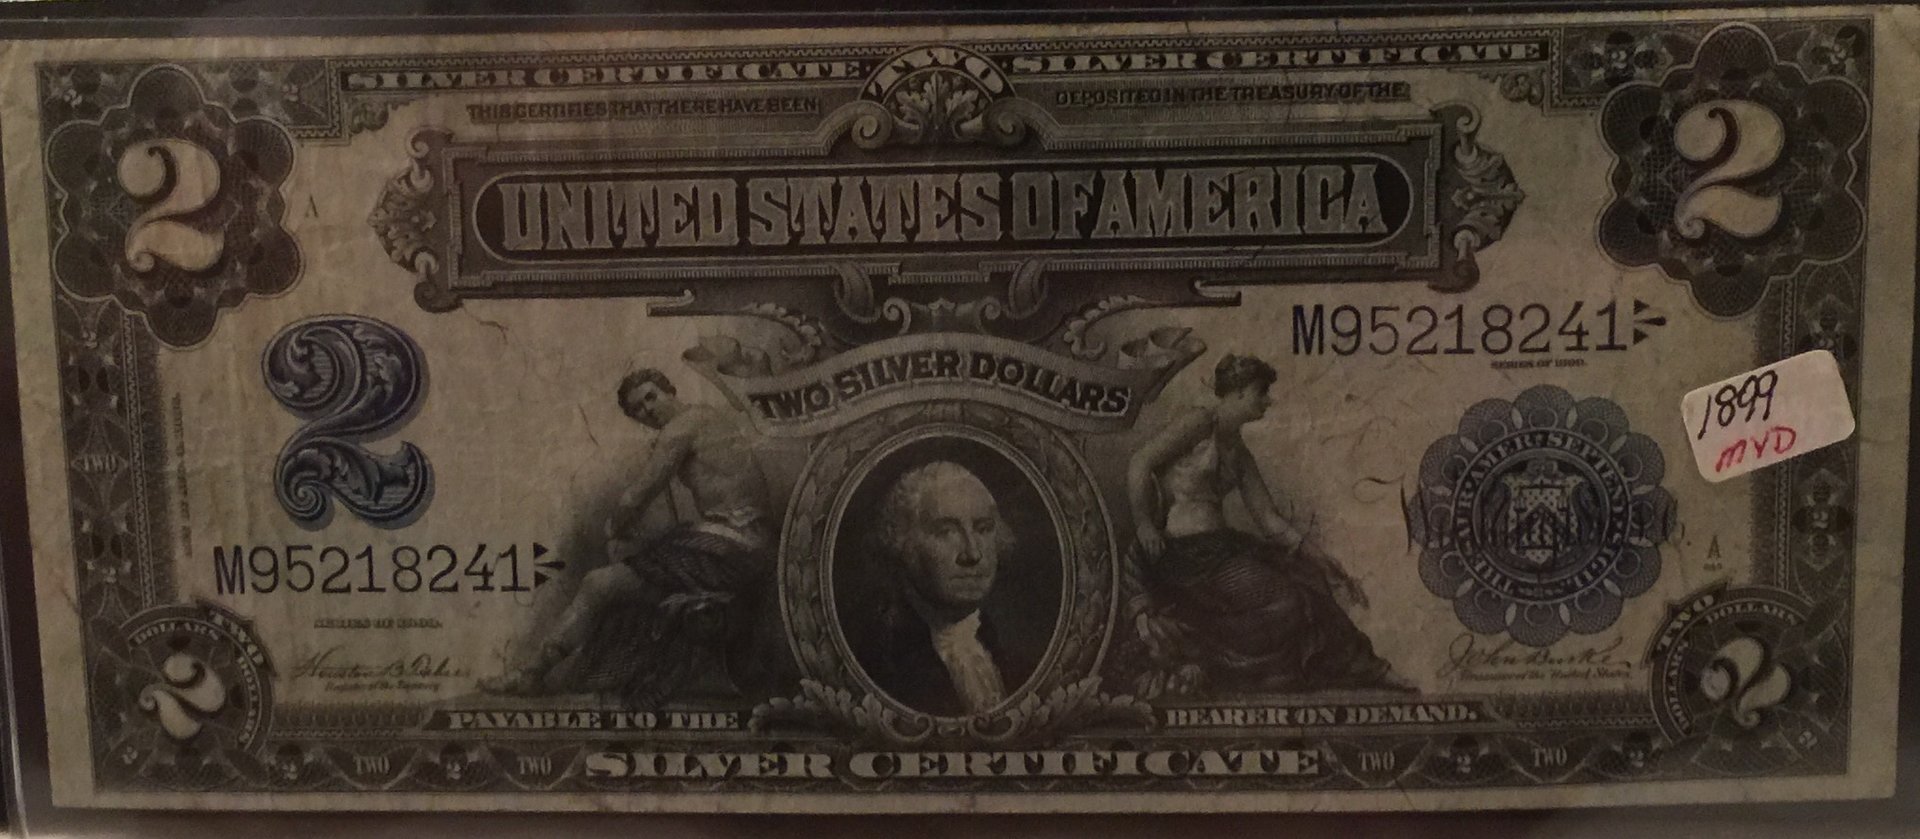 1899 $2 Silver Certificate.jpg